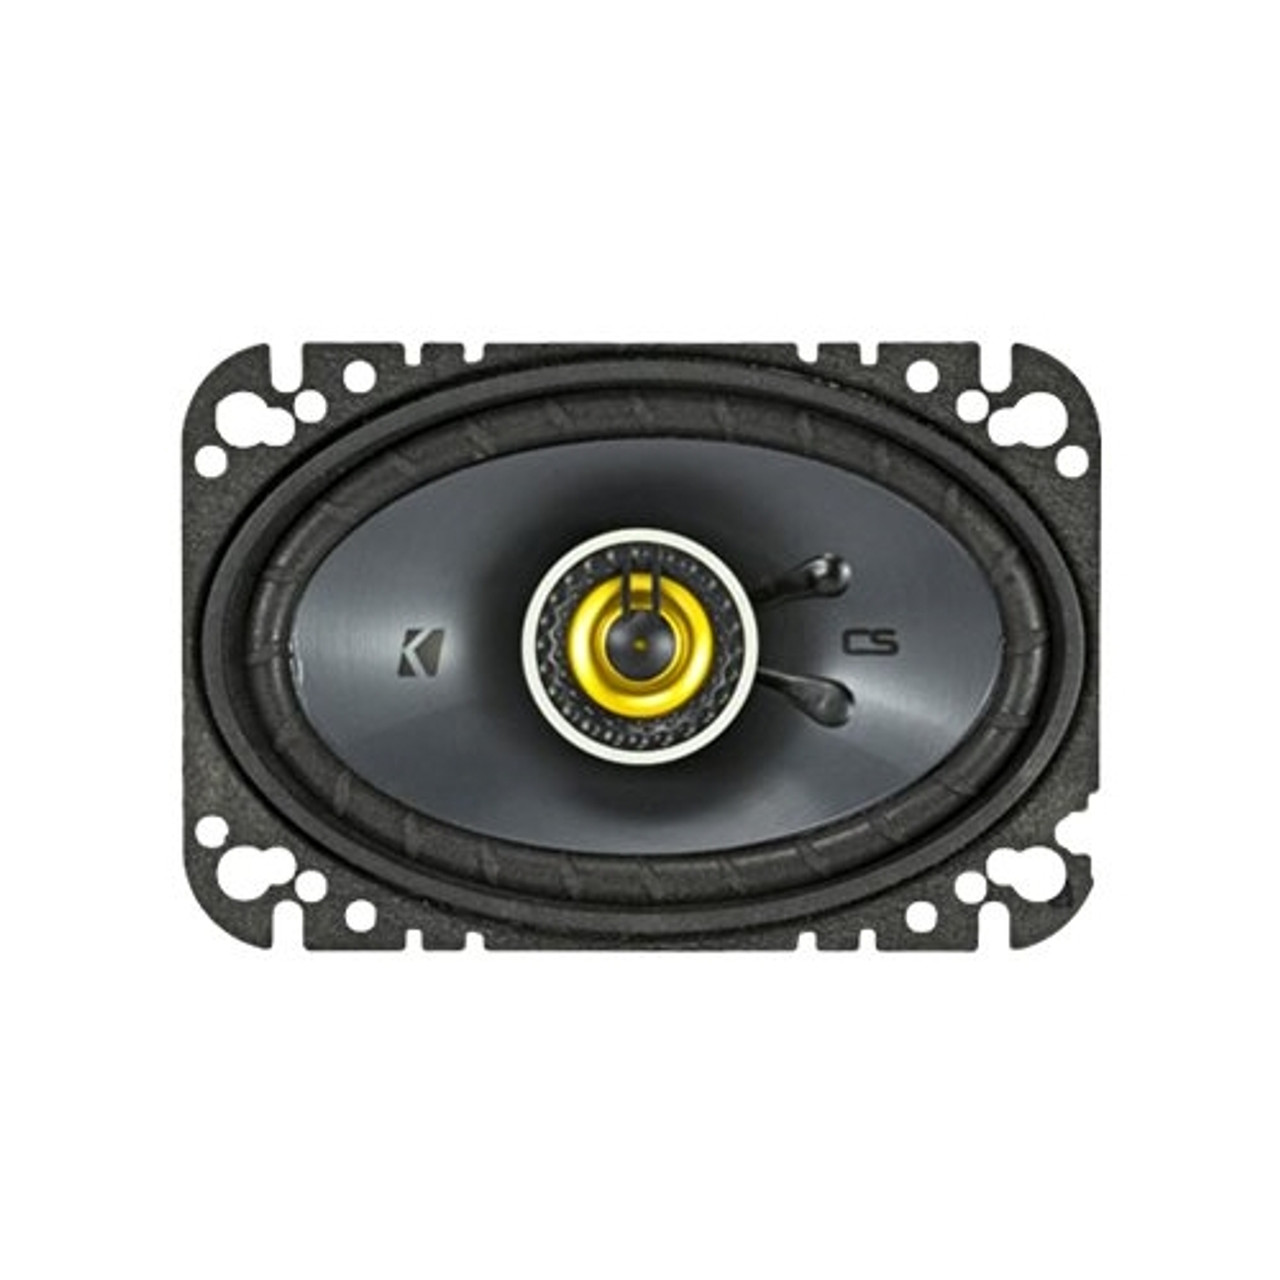 KICKER - CS Series 4" x 6" 2-Way Car Speakers with Polypropylene Cones (Pair) - Yellow/Black